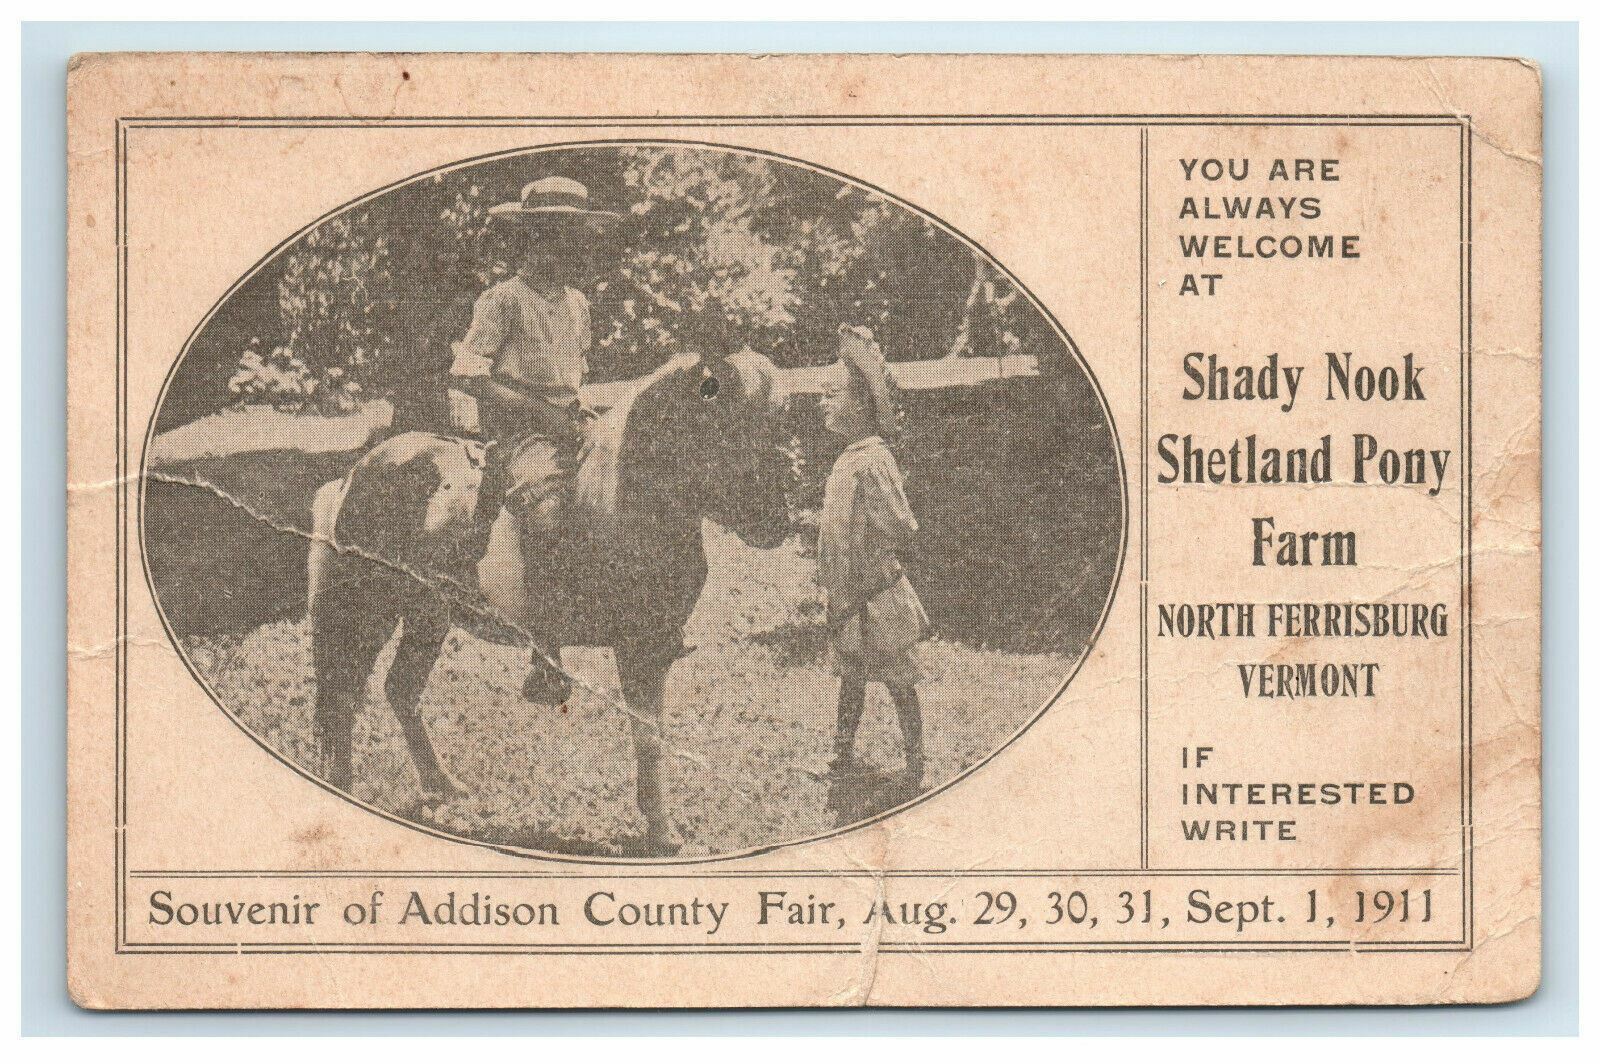 1911 Shady Nook Shetland Pony Farm Ferrisburg VT Souvenir Addison County Fair